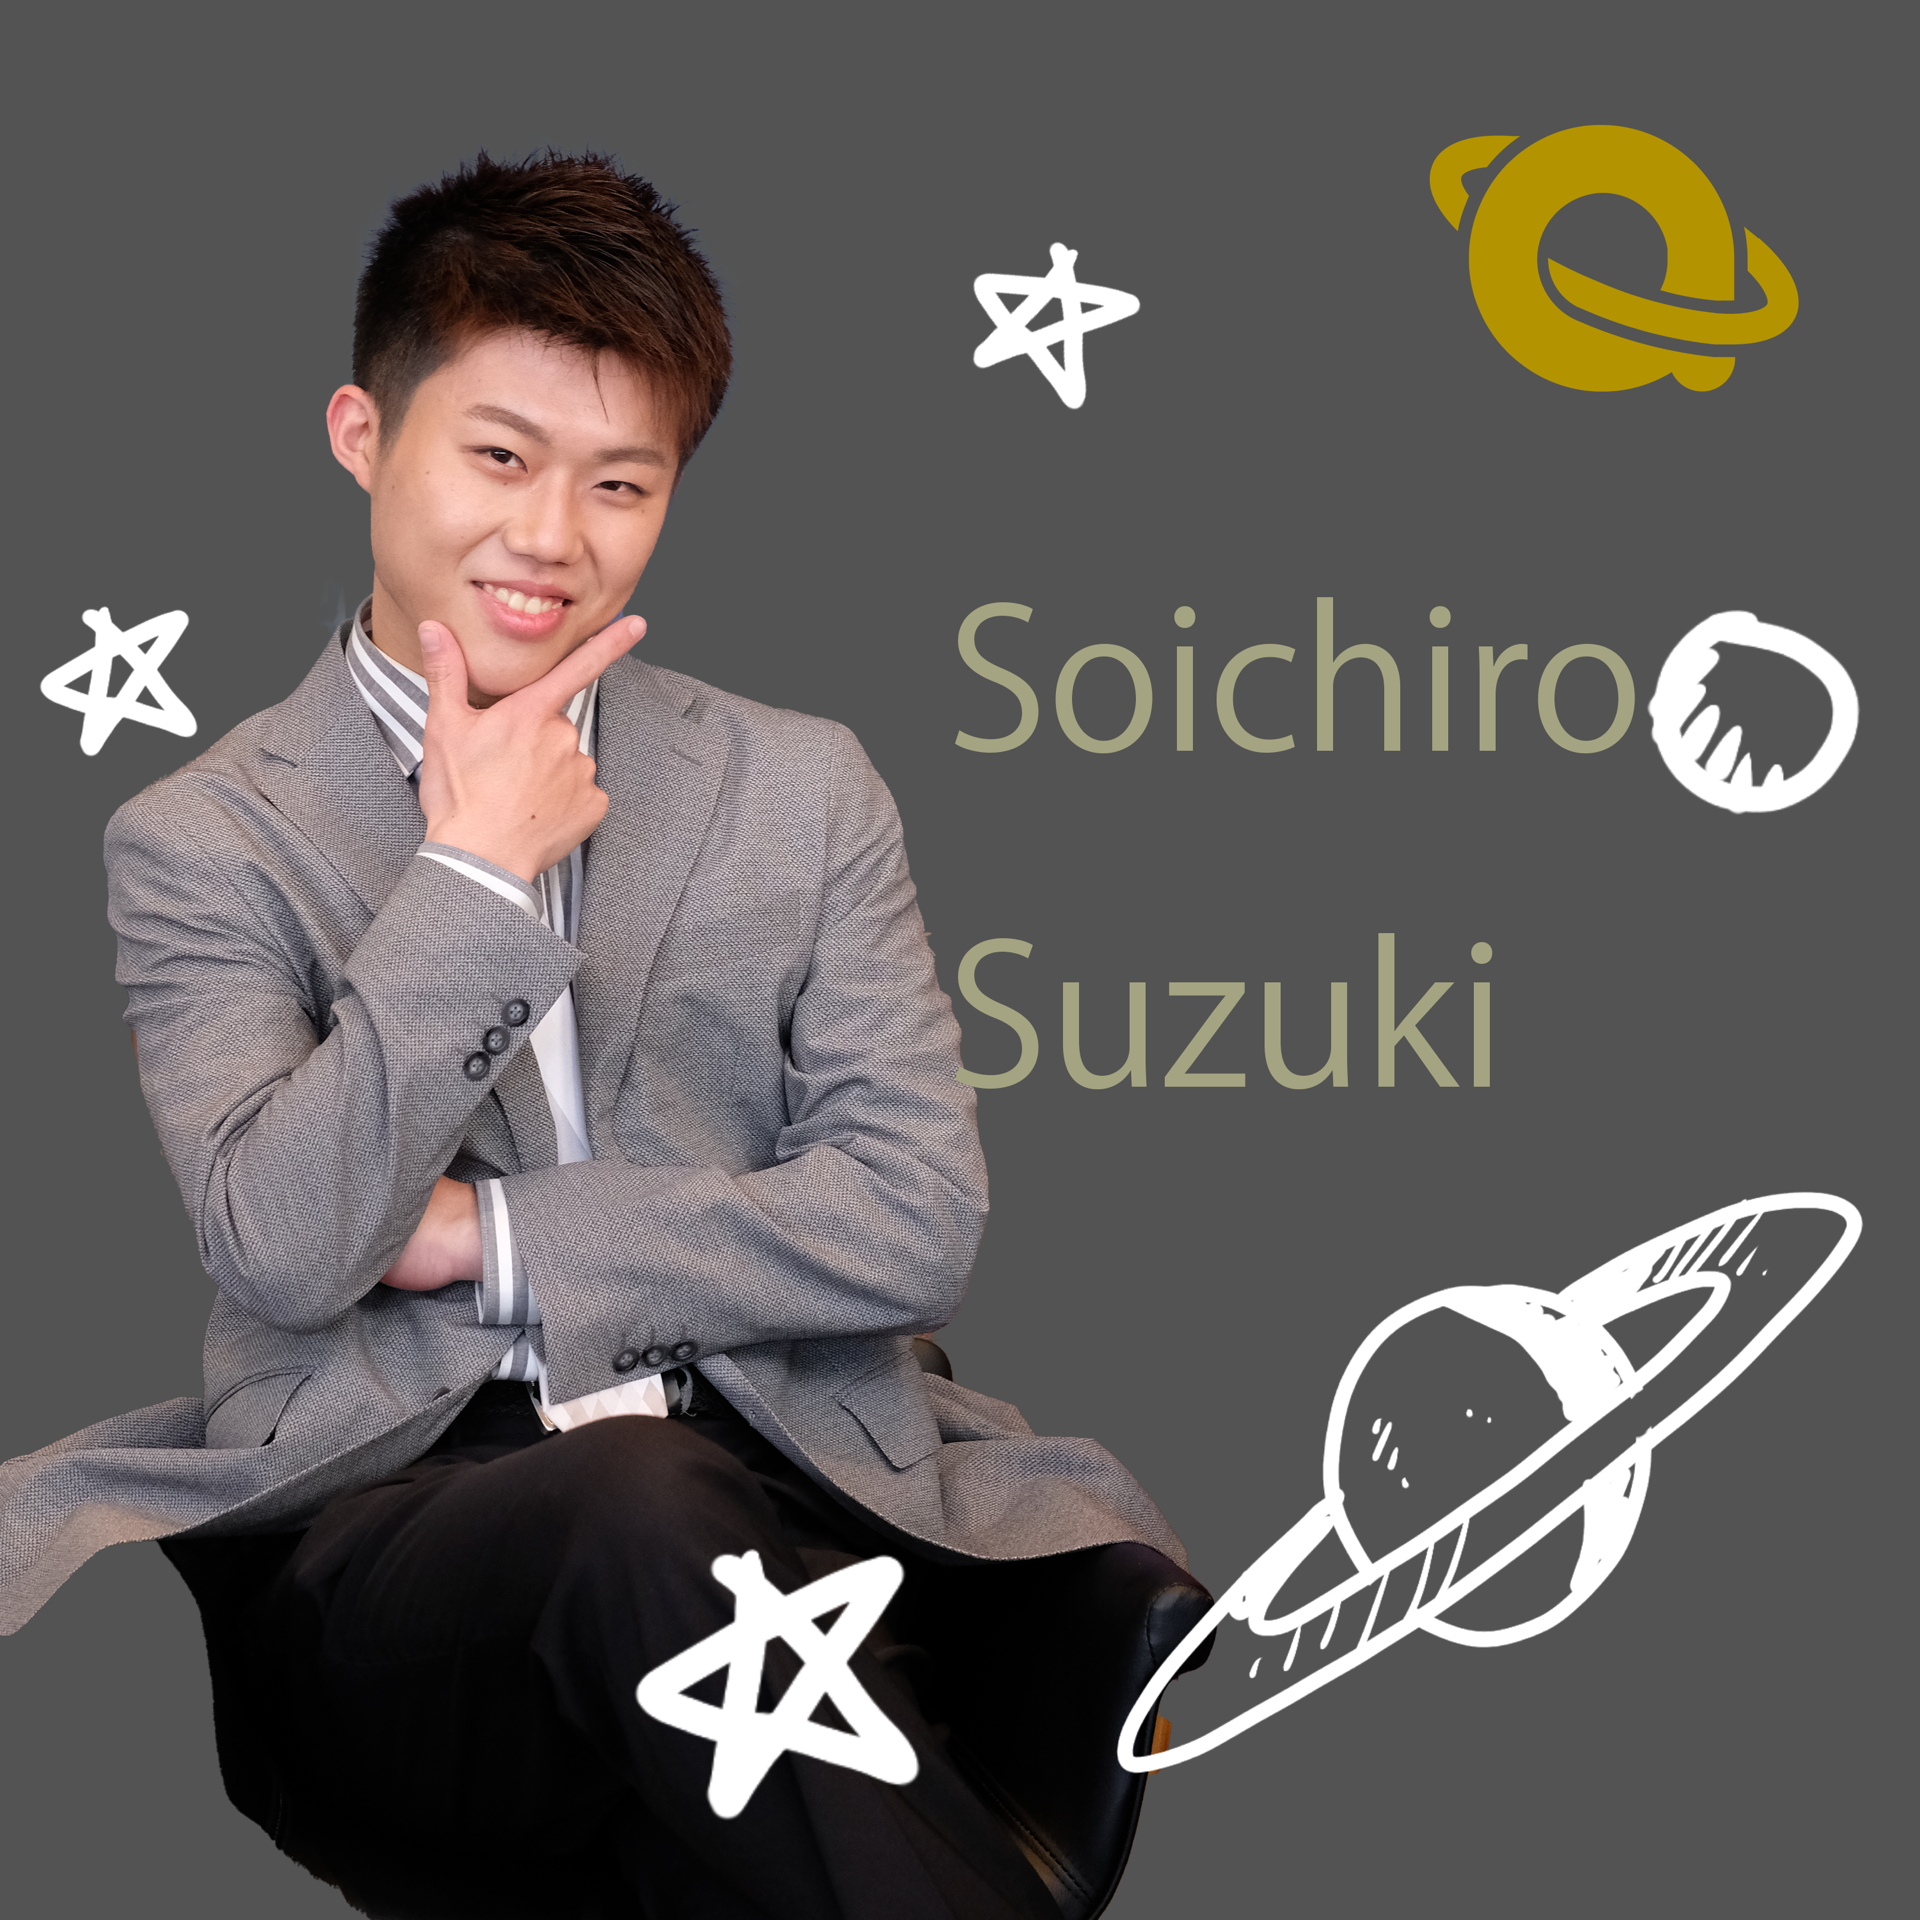 Soichiro Suzuki